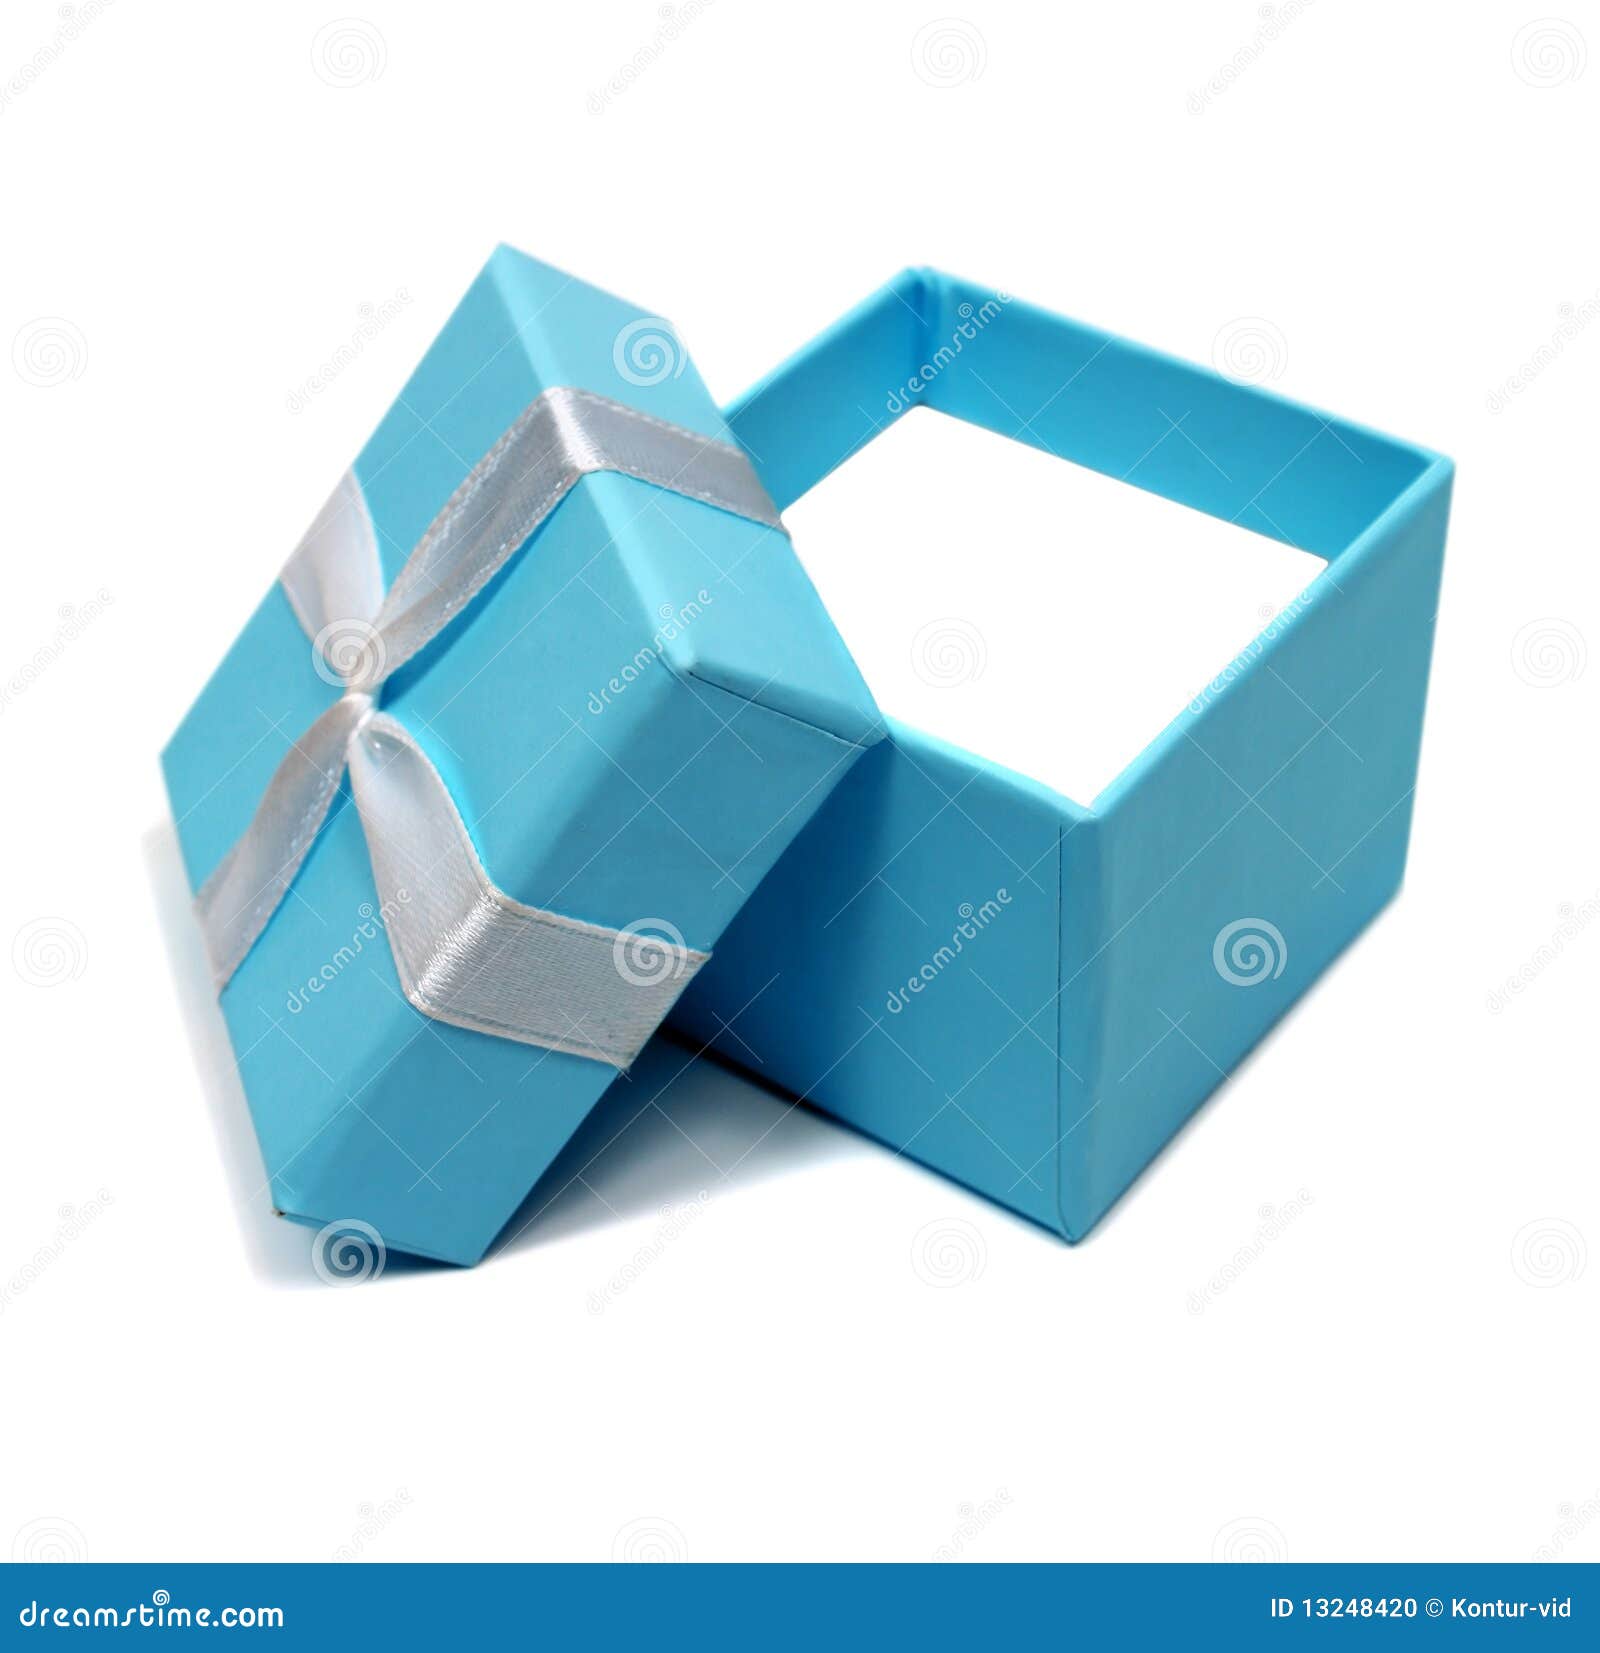 https://thumbs.dreamstime.com/z/open-blue-box-gifts-13248420.jpg